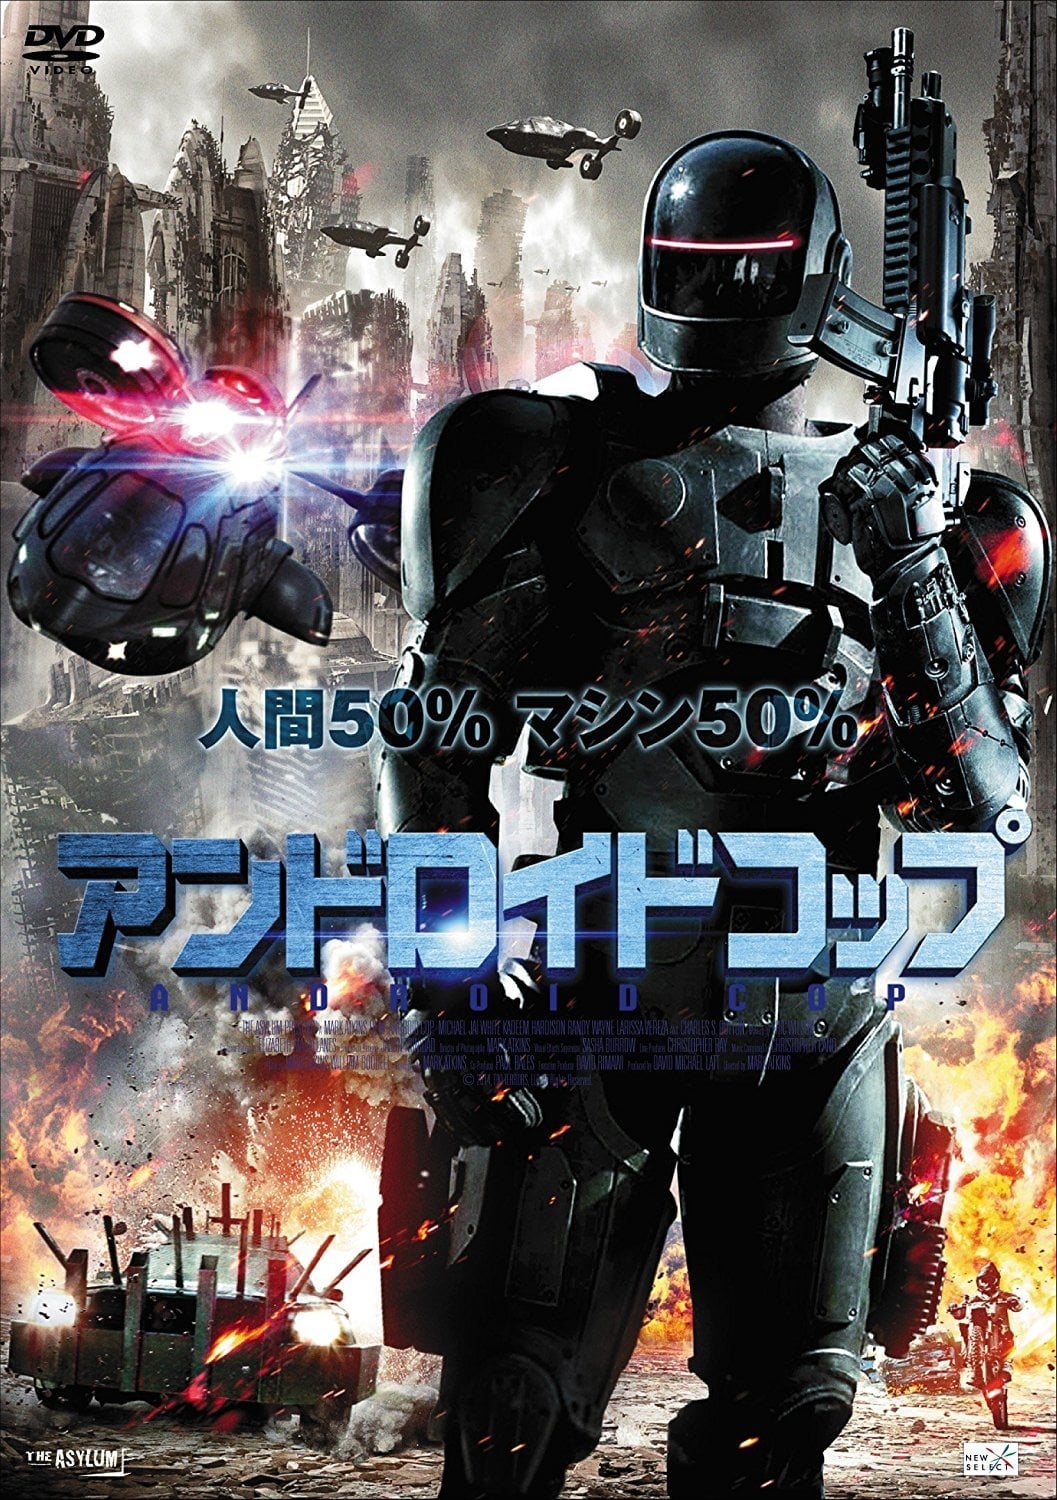 Watch RoboCop (2014) Full Movie Online Free | Movie & TV 